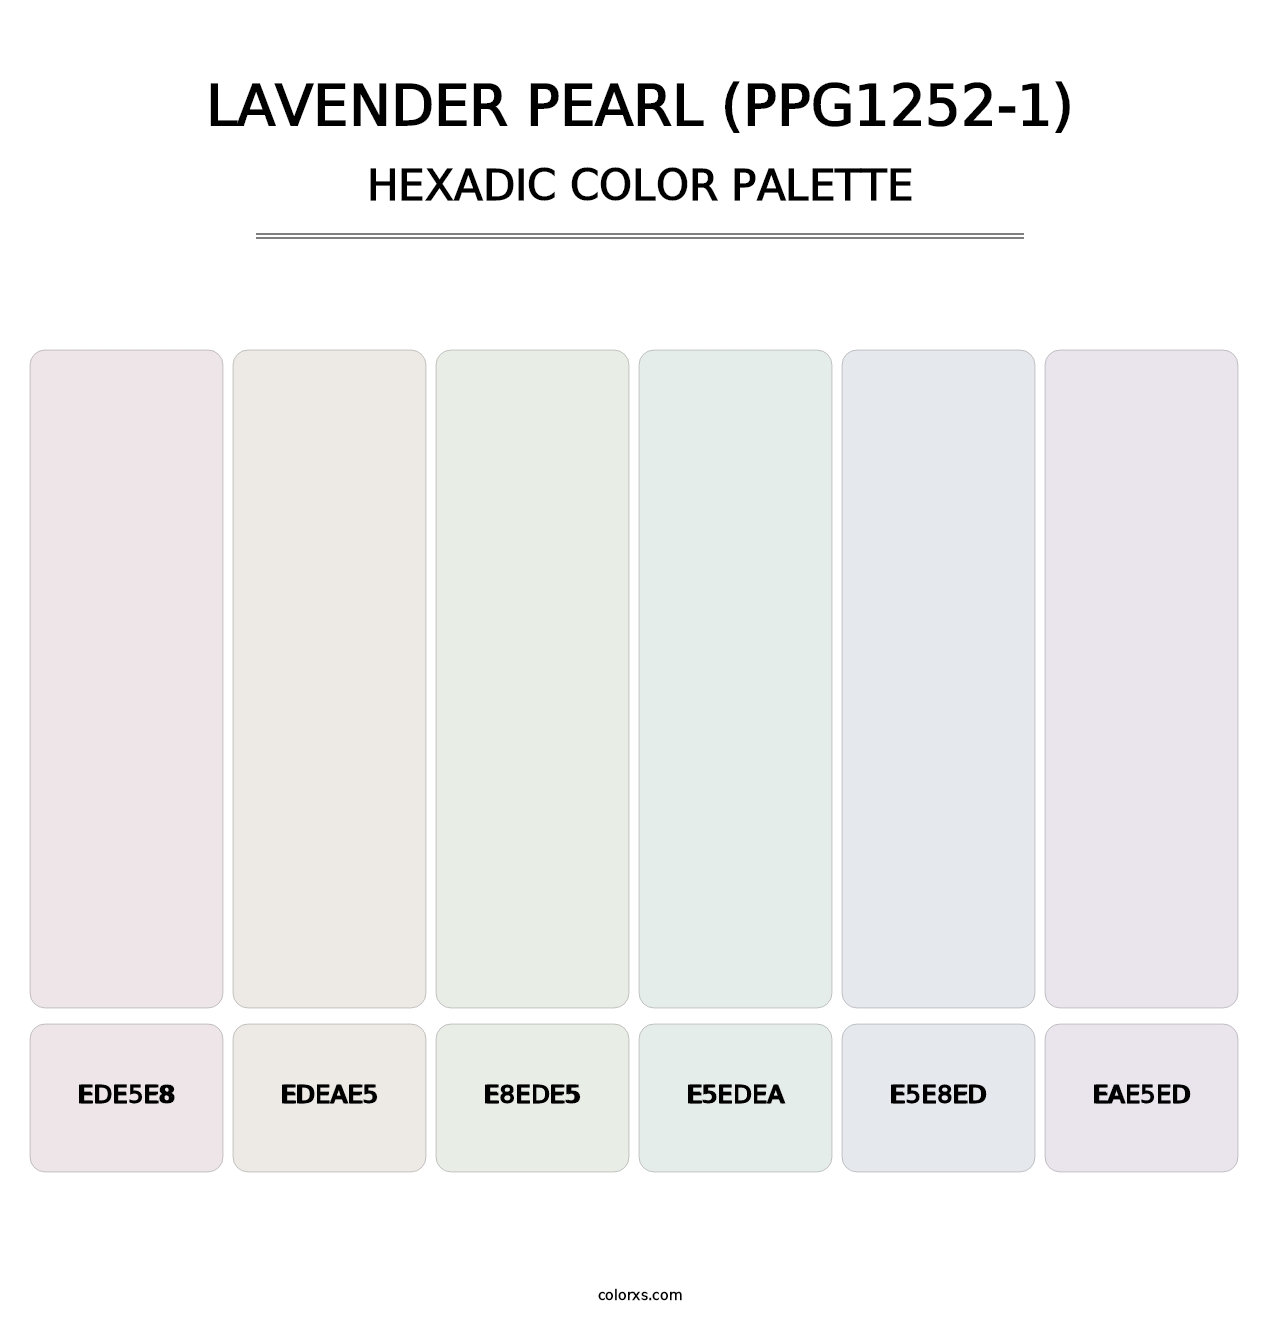 Lavender Pearl (PPG1252-1) - Hexadic Color Palette